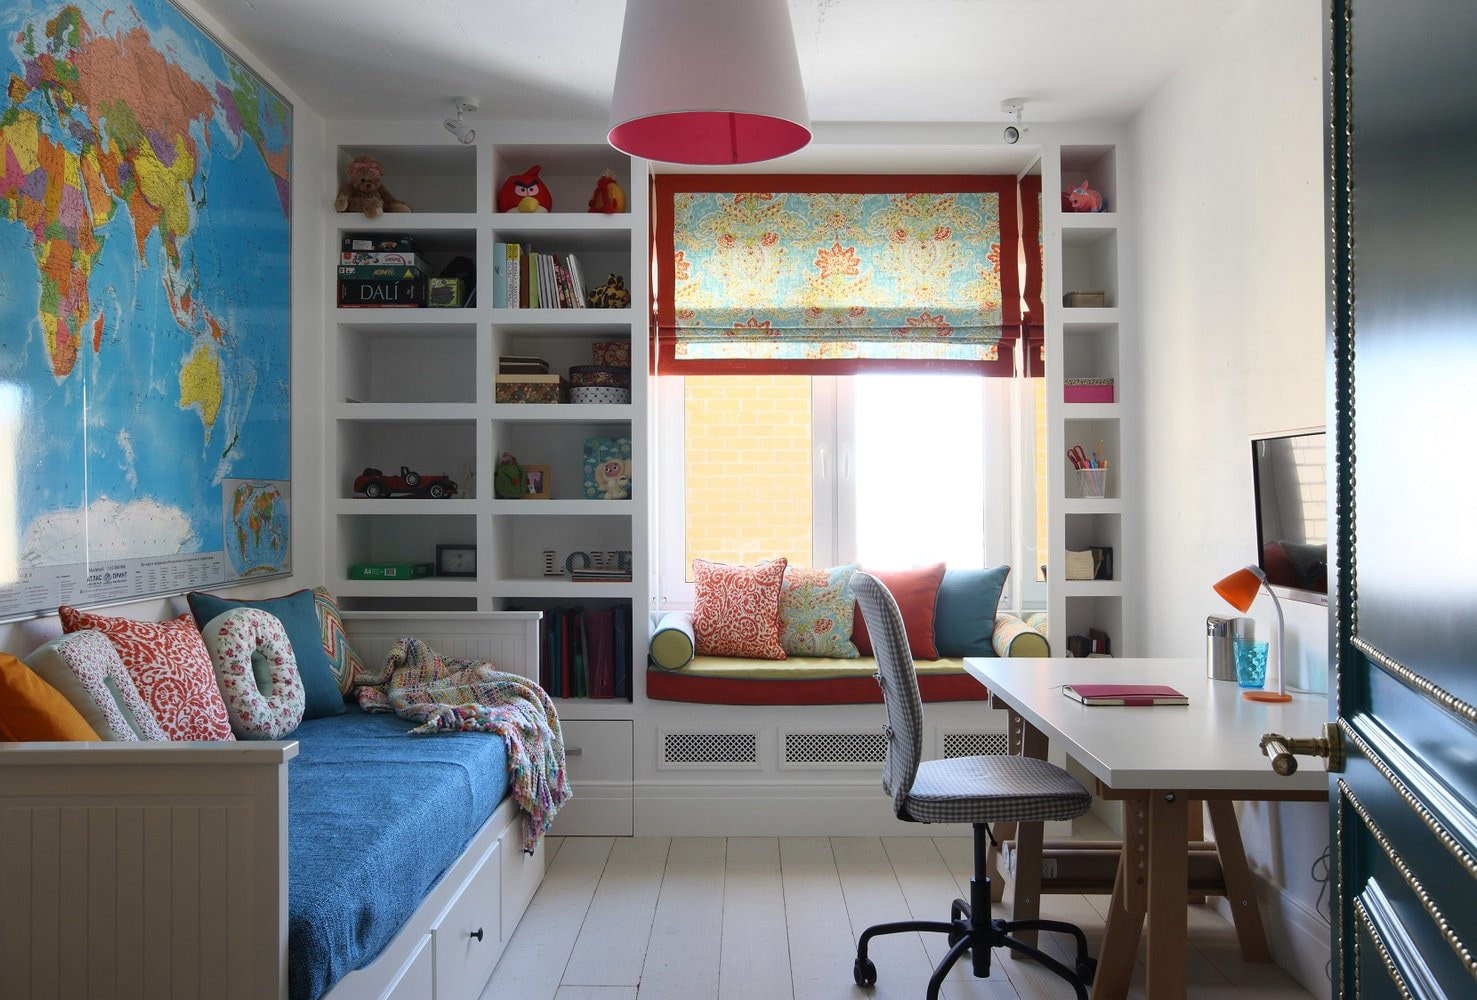 gardiner i rummet med en tonårs pojke design